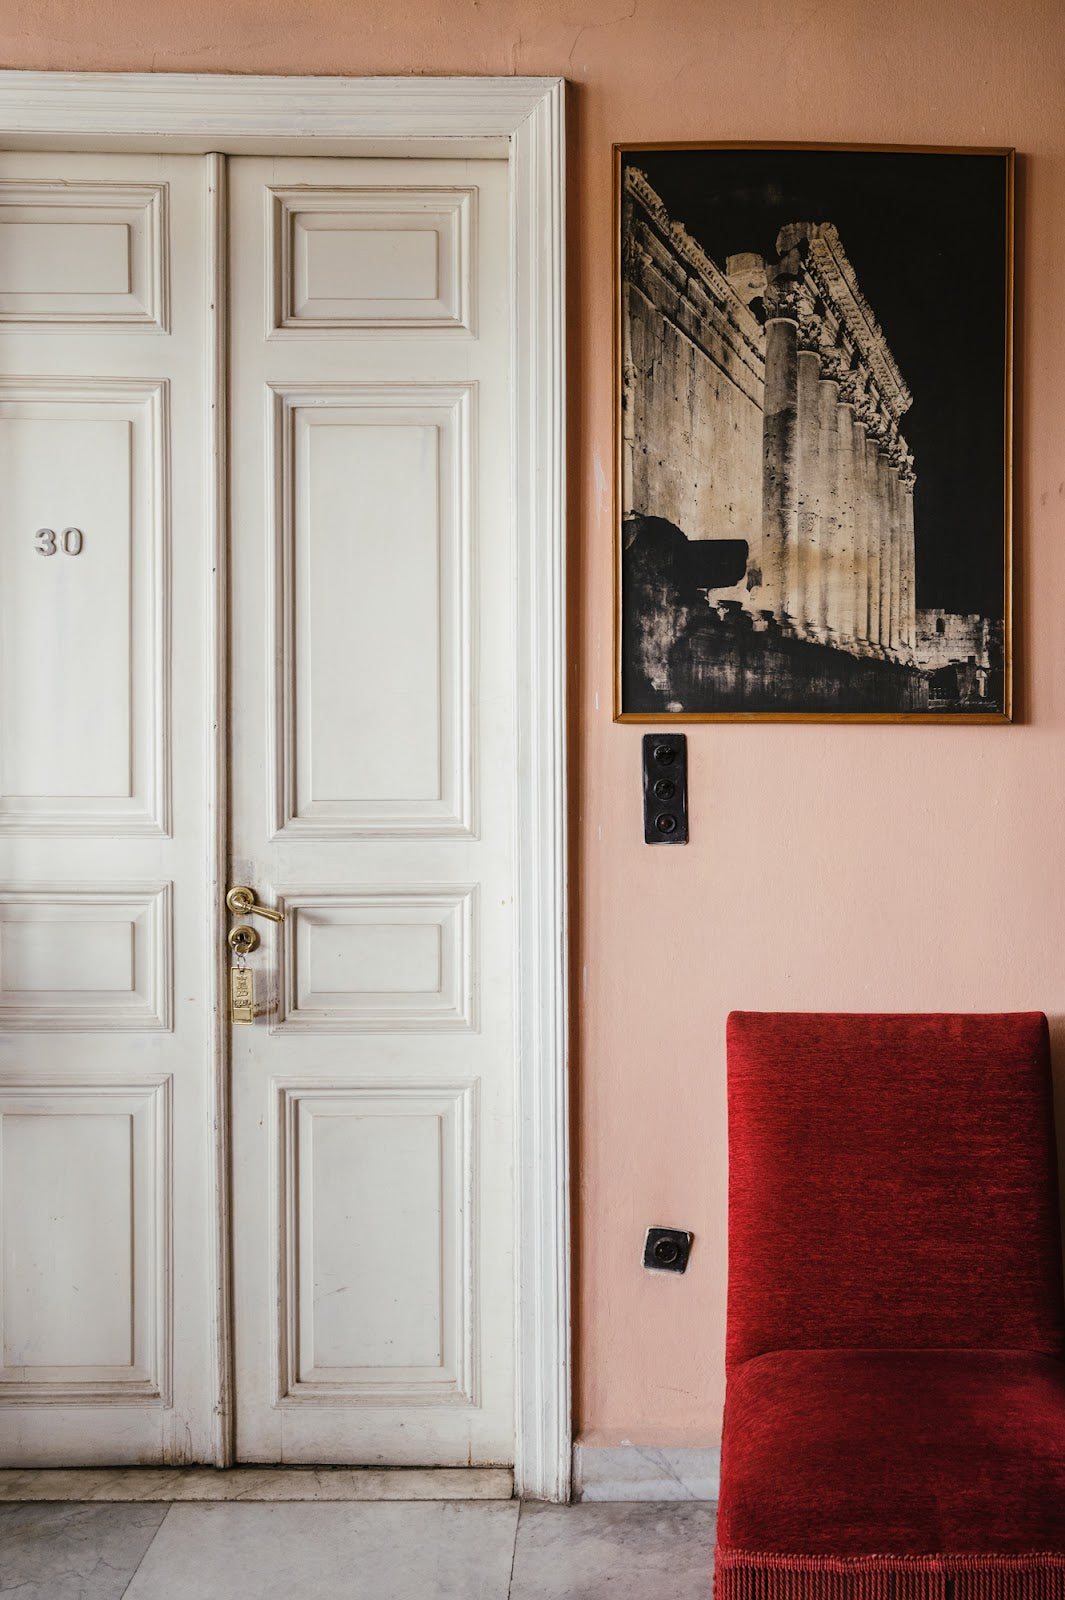 Room n. 30, Charles de Gaulle's quarters.